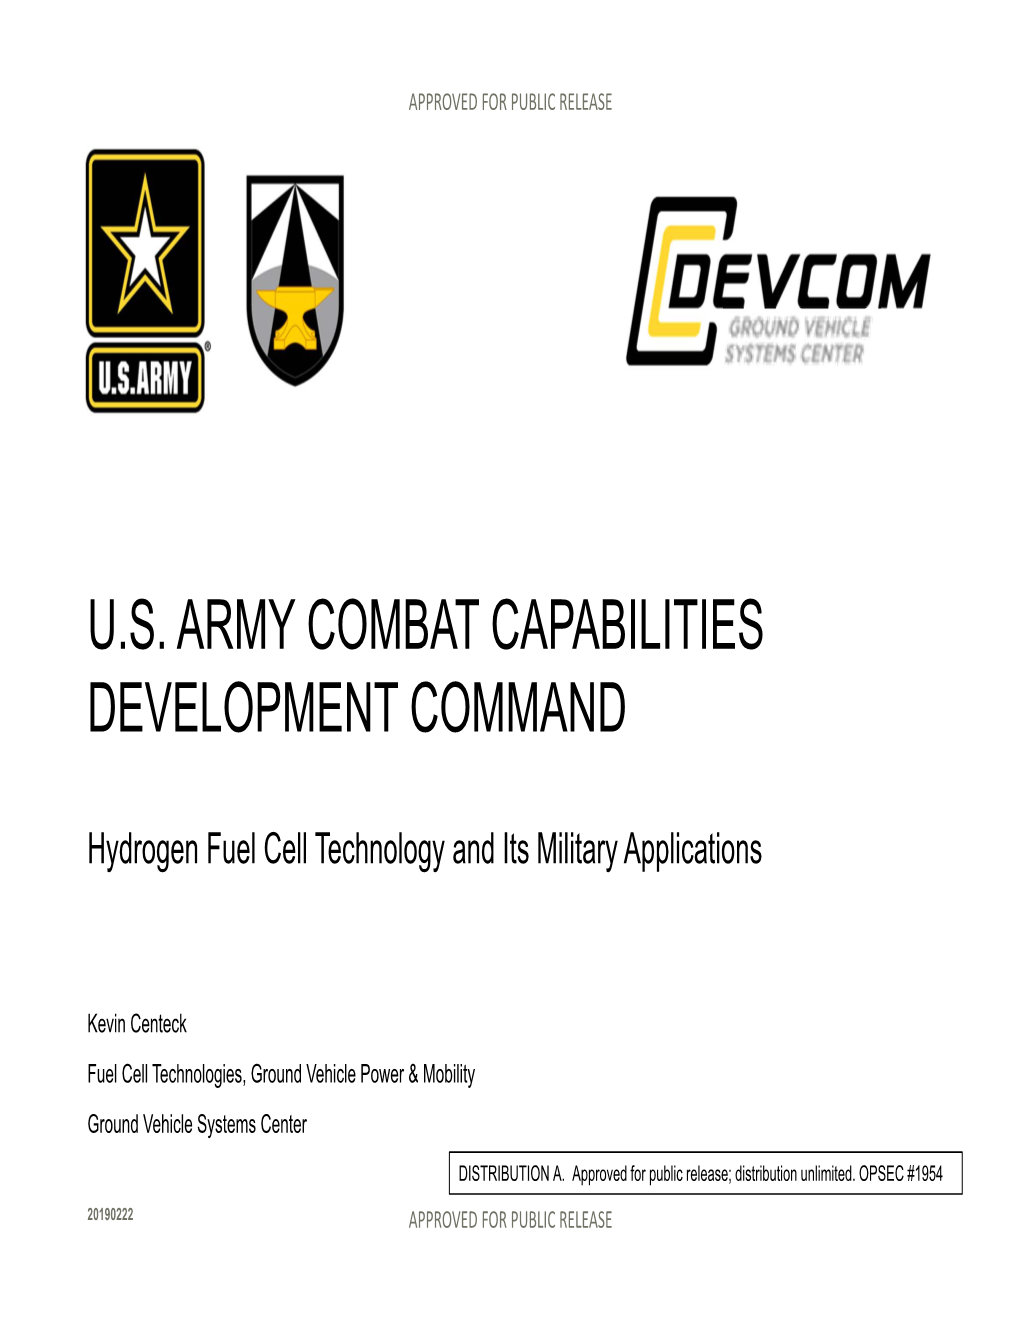 U.S. Army Combat Capabilities Development Command Hydrogen